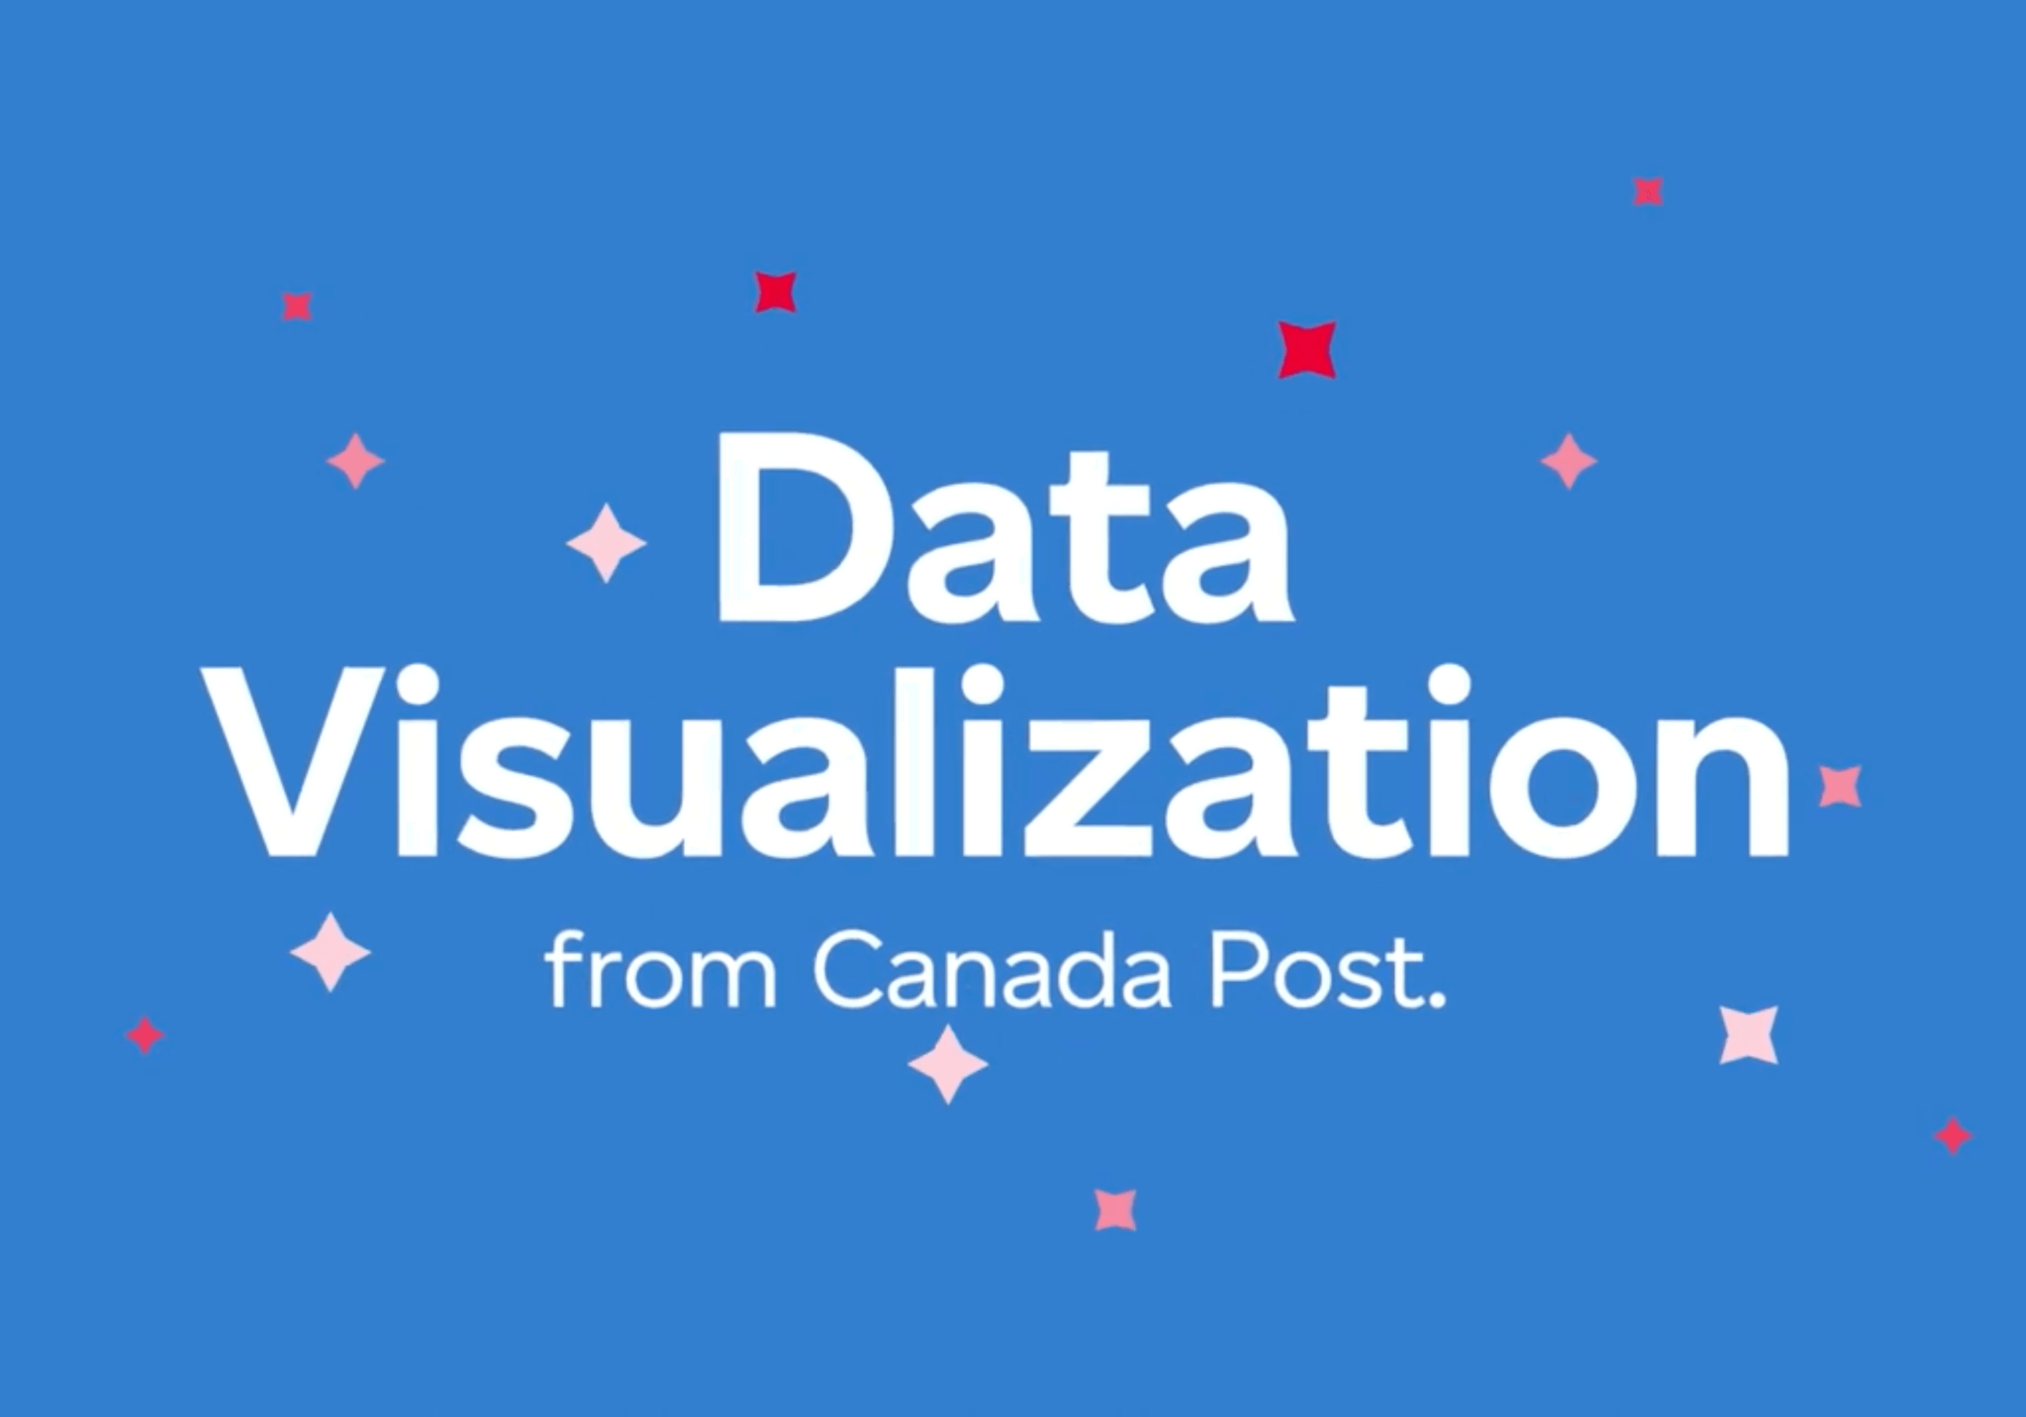 Canada Post’s Data Visualization